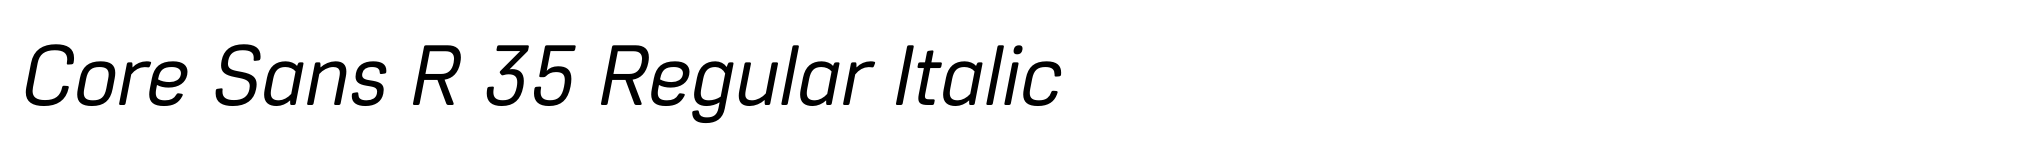 Core Sans R 35 Regular Italic image